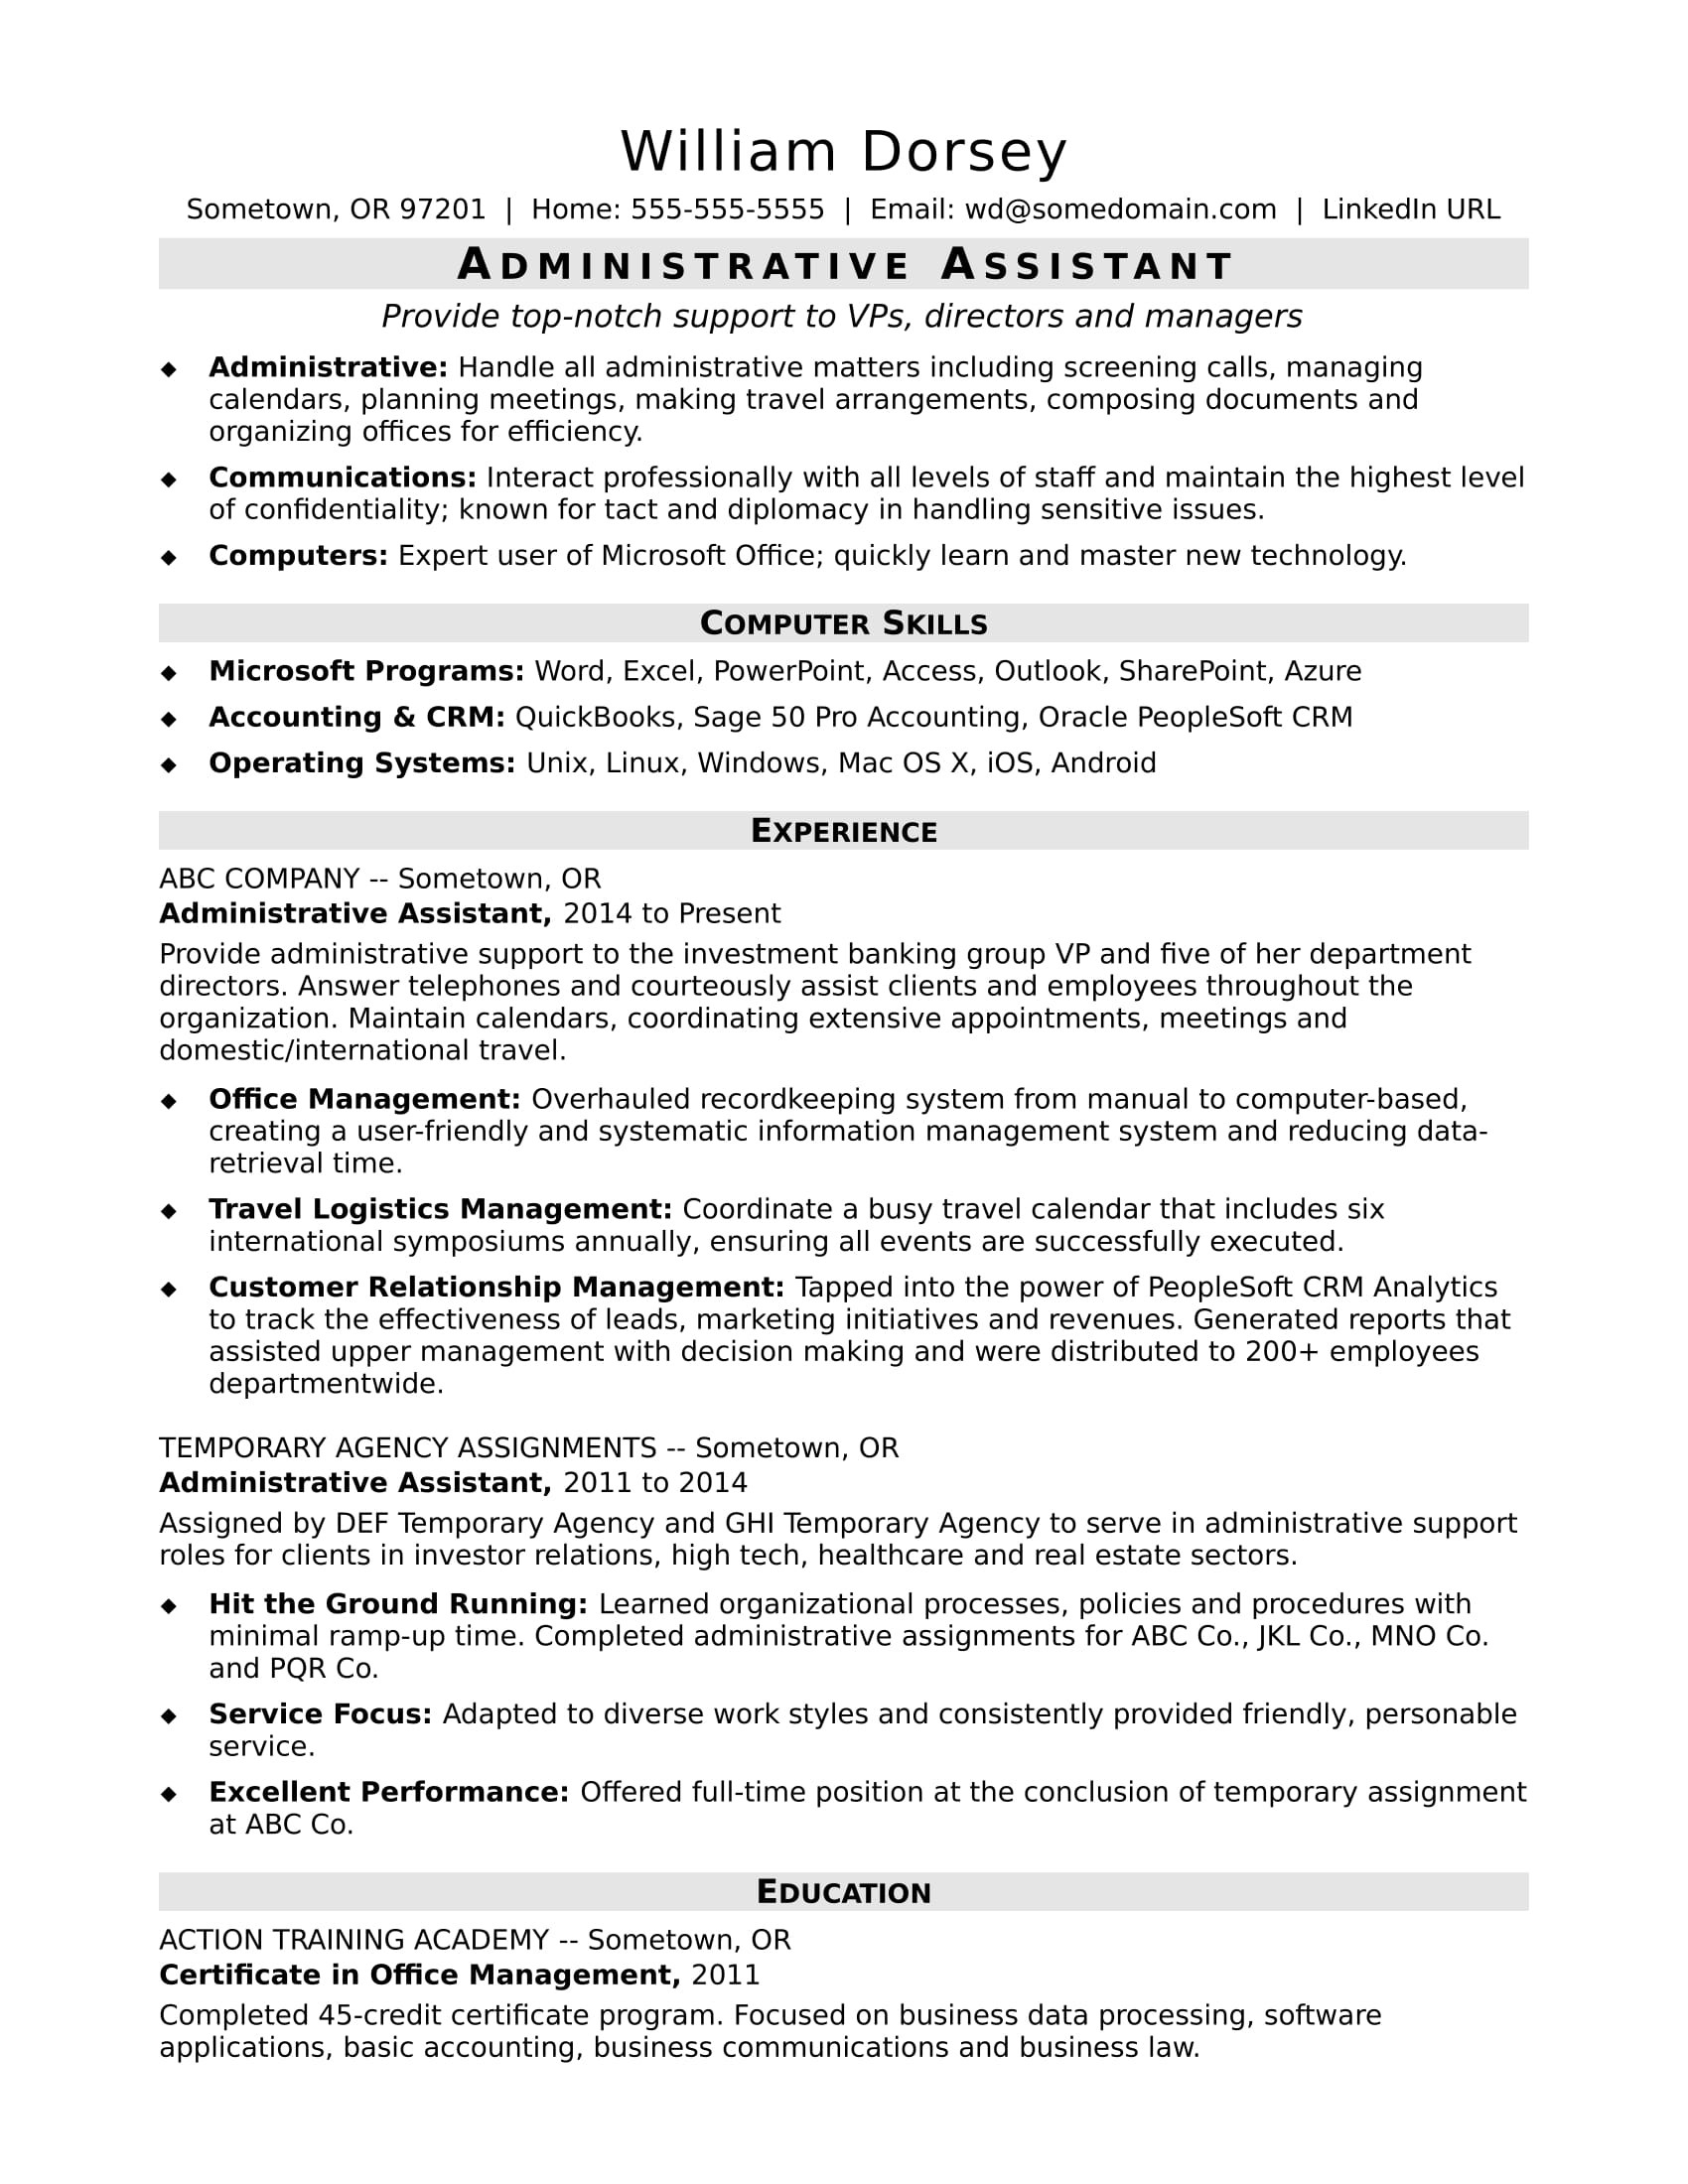 Sample Resume for General Administrative Jobs Administrative assistant Resume Sample Monster.com